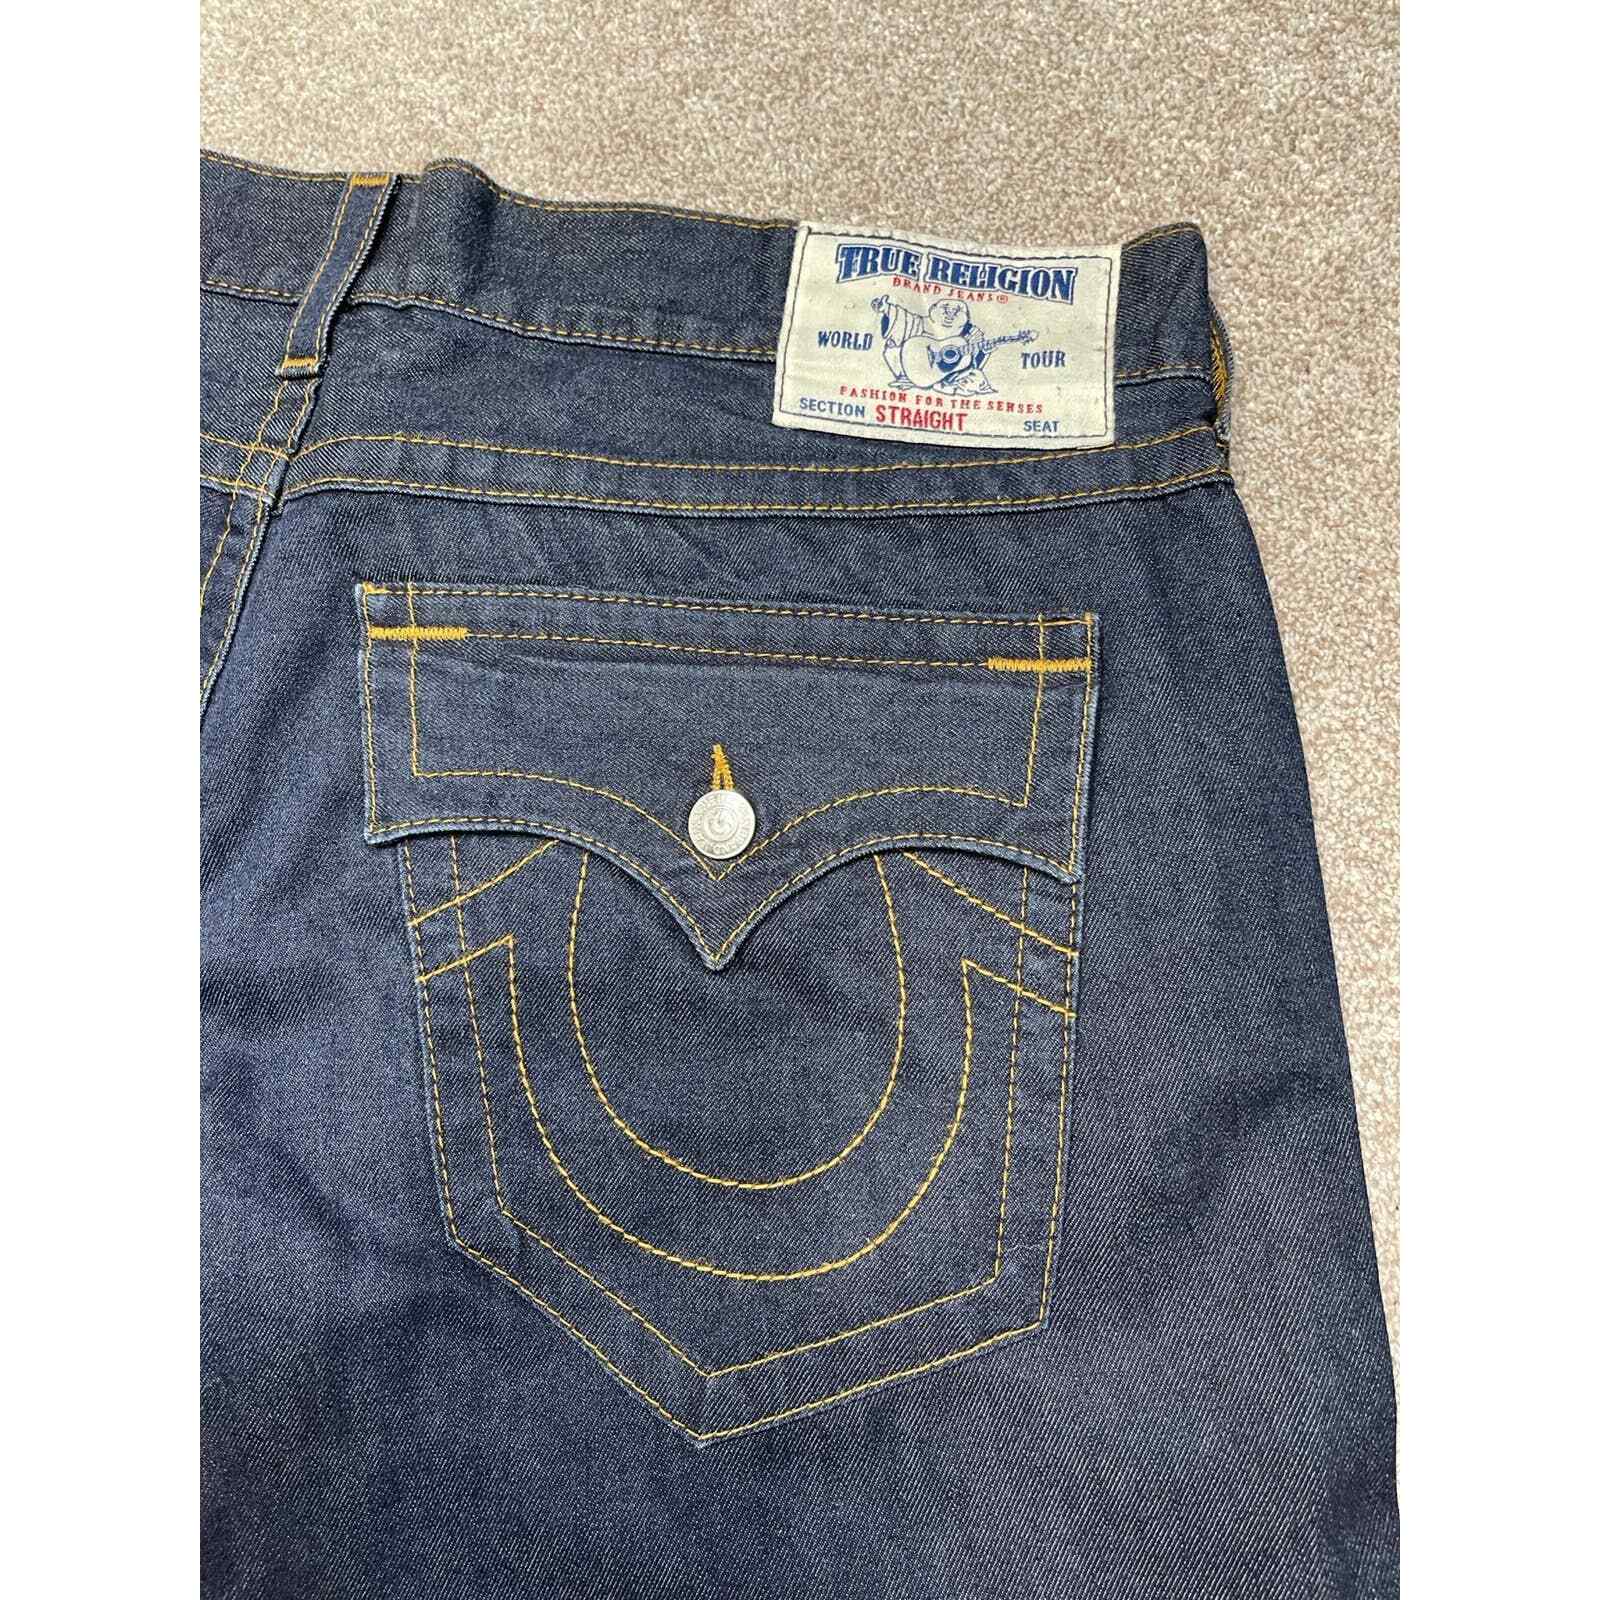 True Religion straight jeans mens sz 42x29.5 flip… - image 3